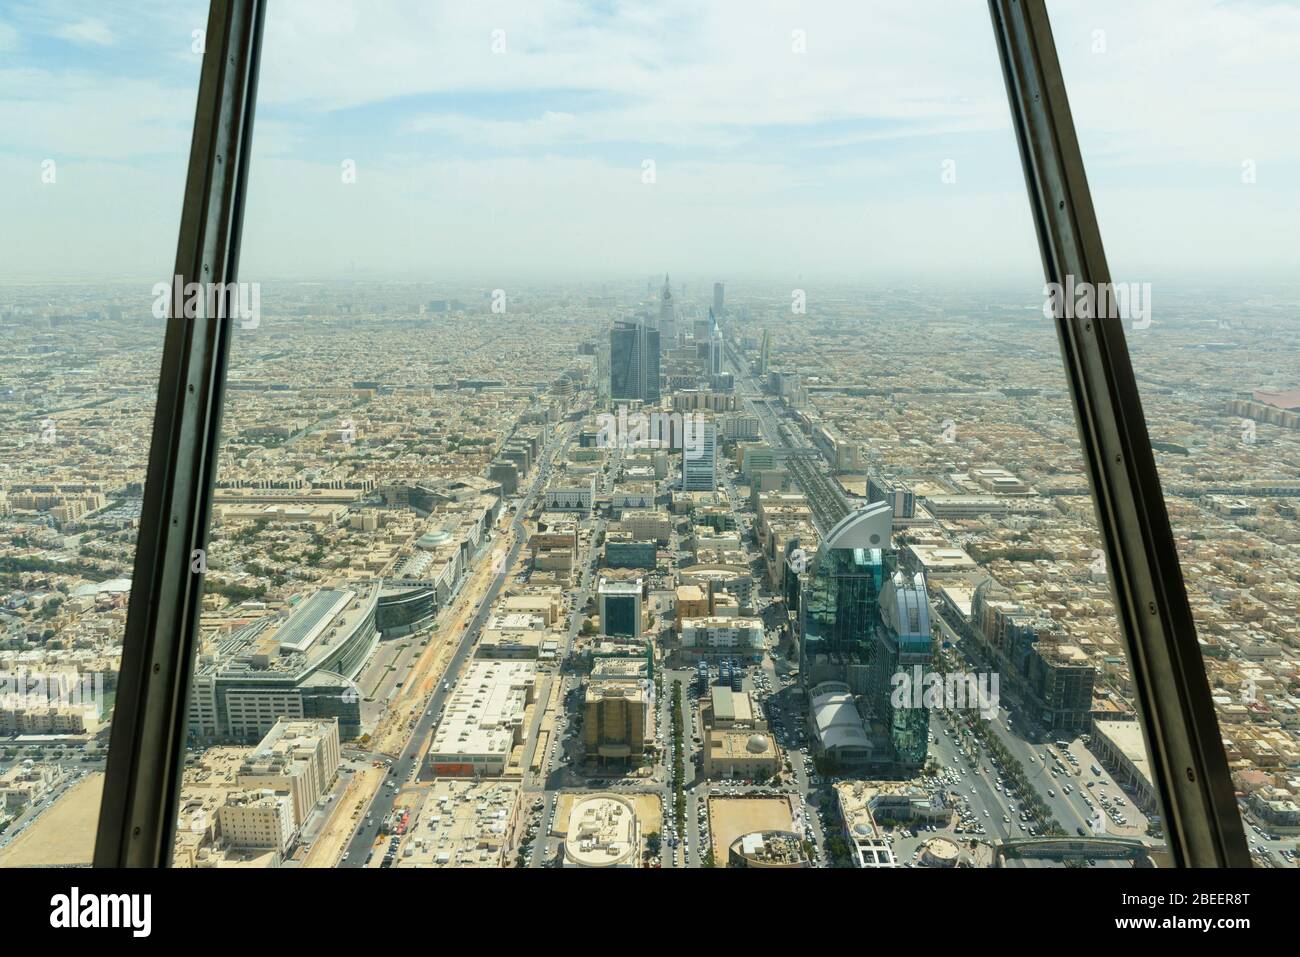 Riyadh, Saudi Arabia. The KingdomTower / Centre. Aerial view of Riyadh city from the skybridge. Stock Photo